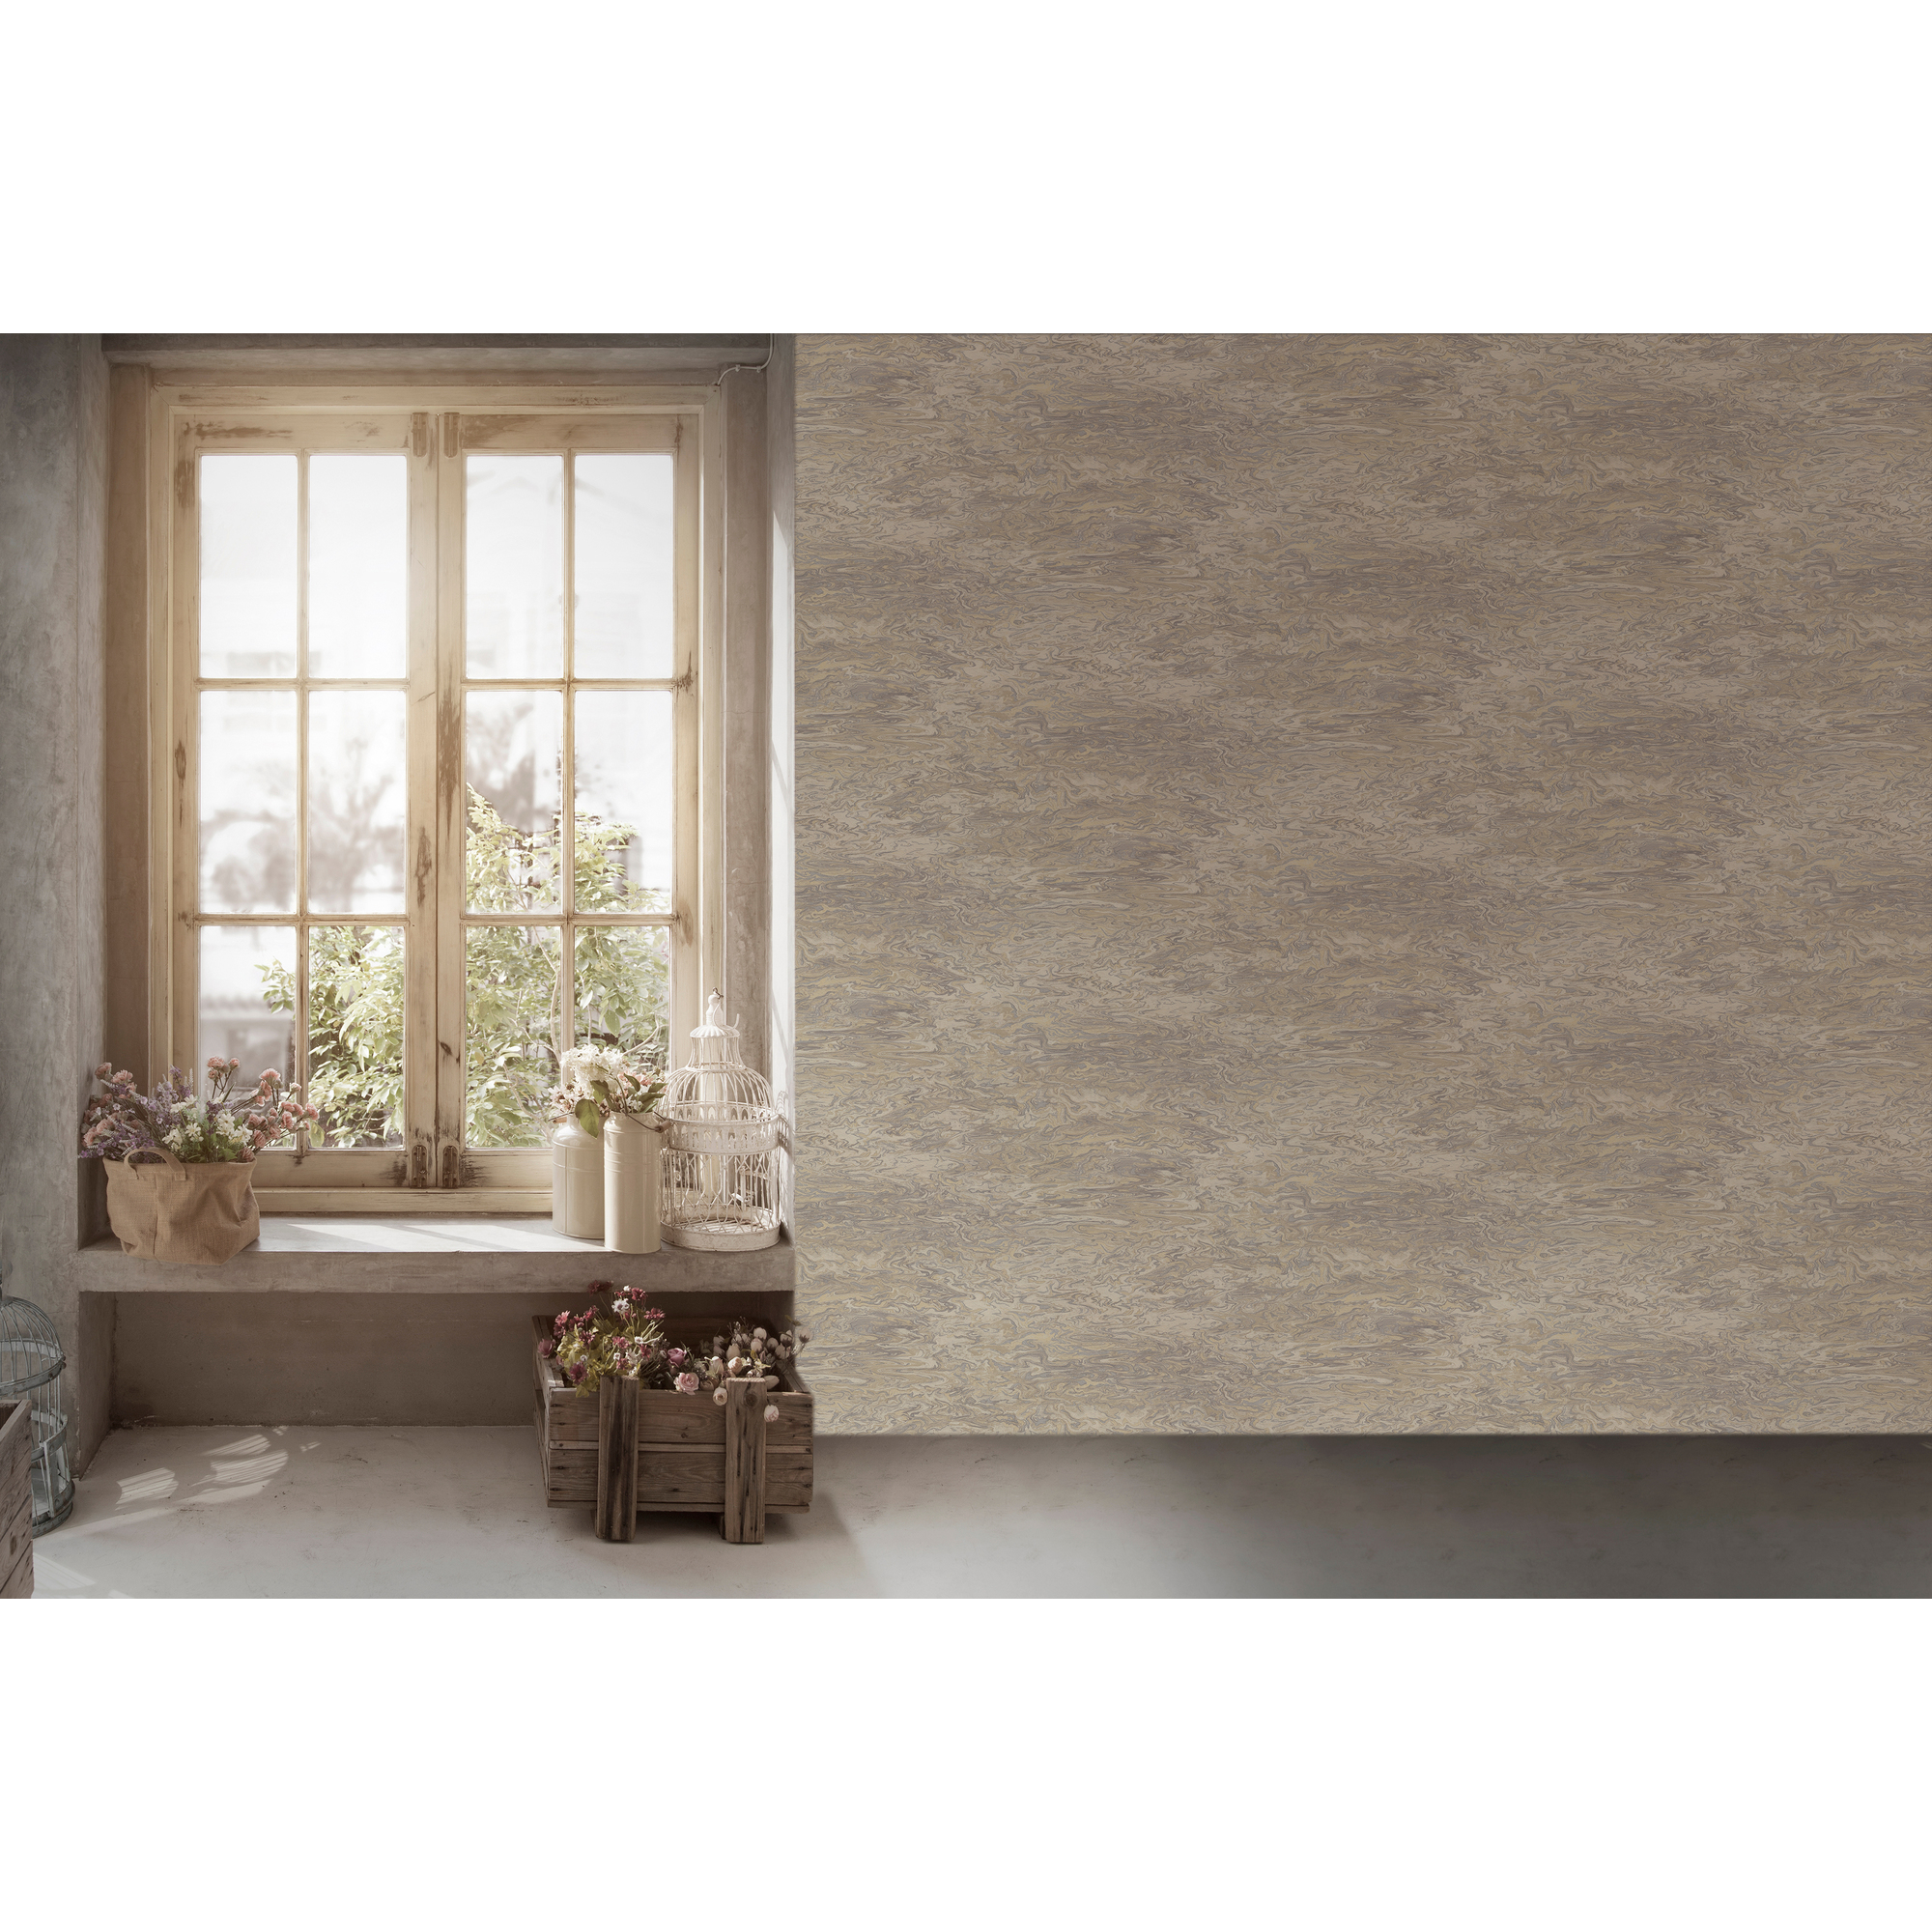 Vliestapete 'My Home. My Spa.' Marmoroptik beige 10,05 x 0,53 m + product picture